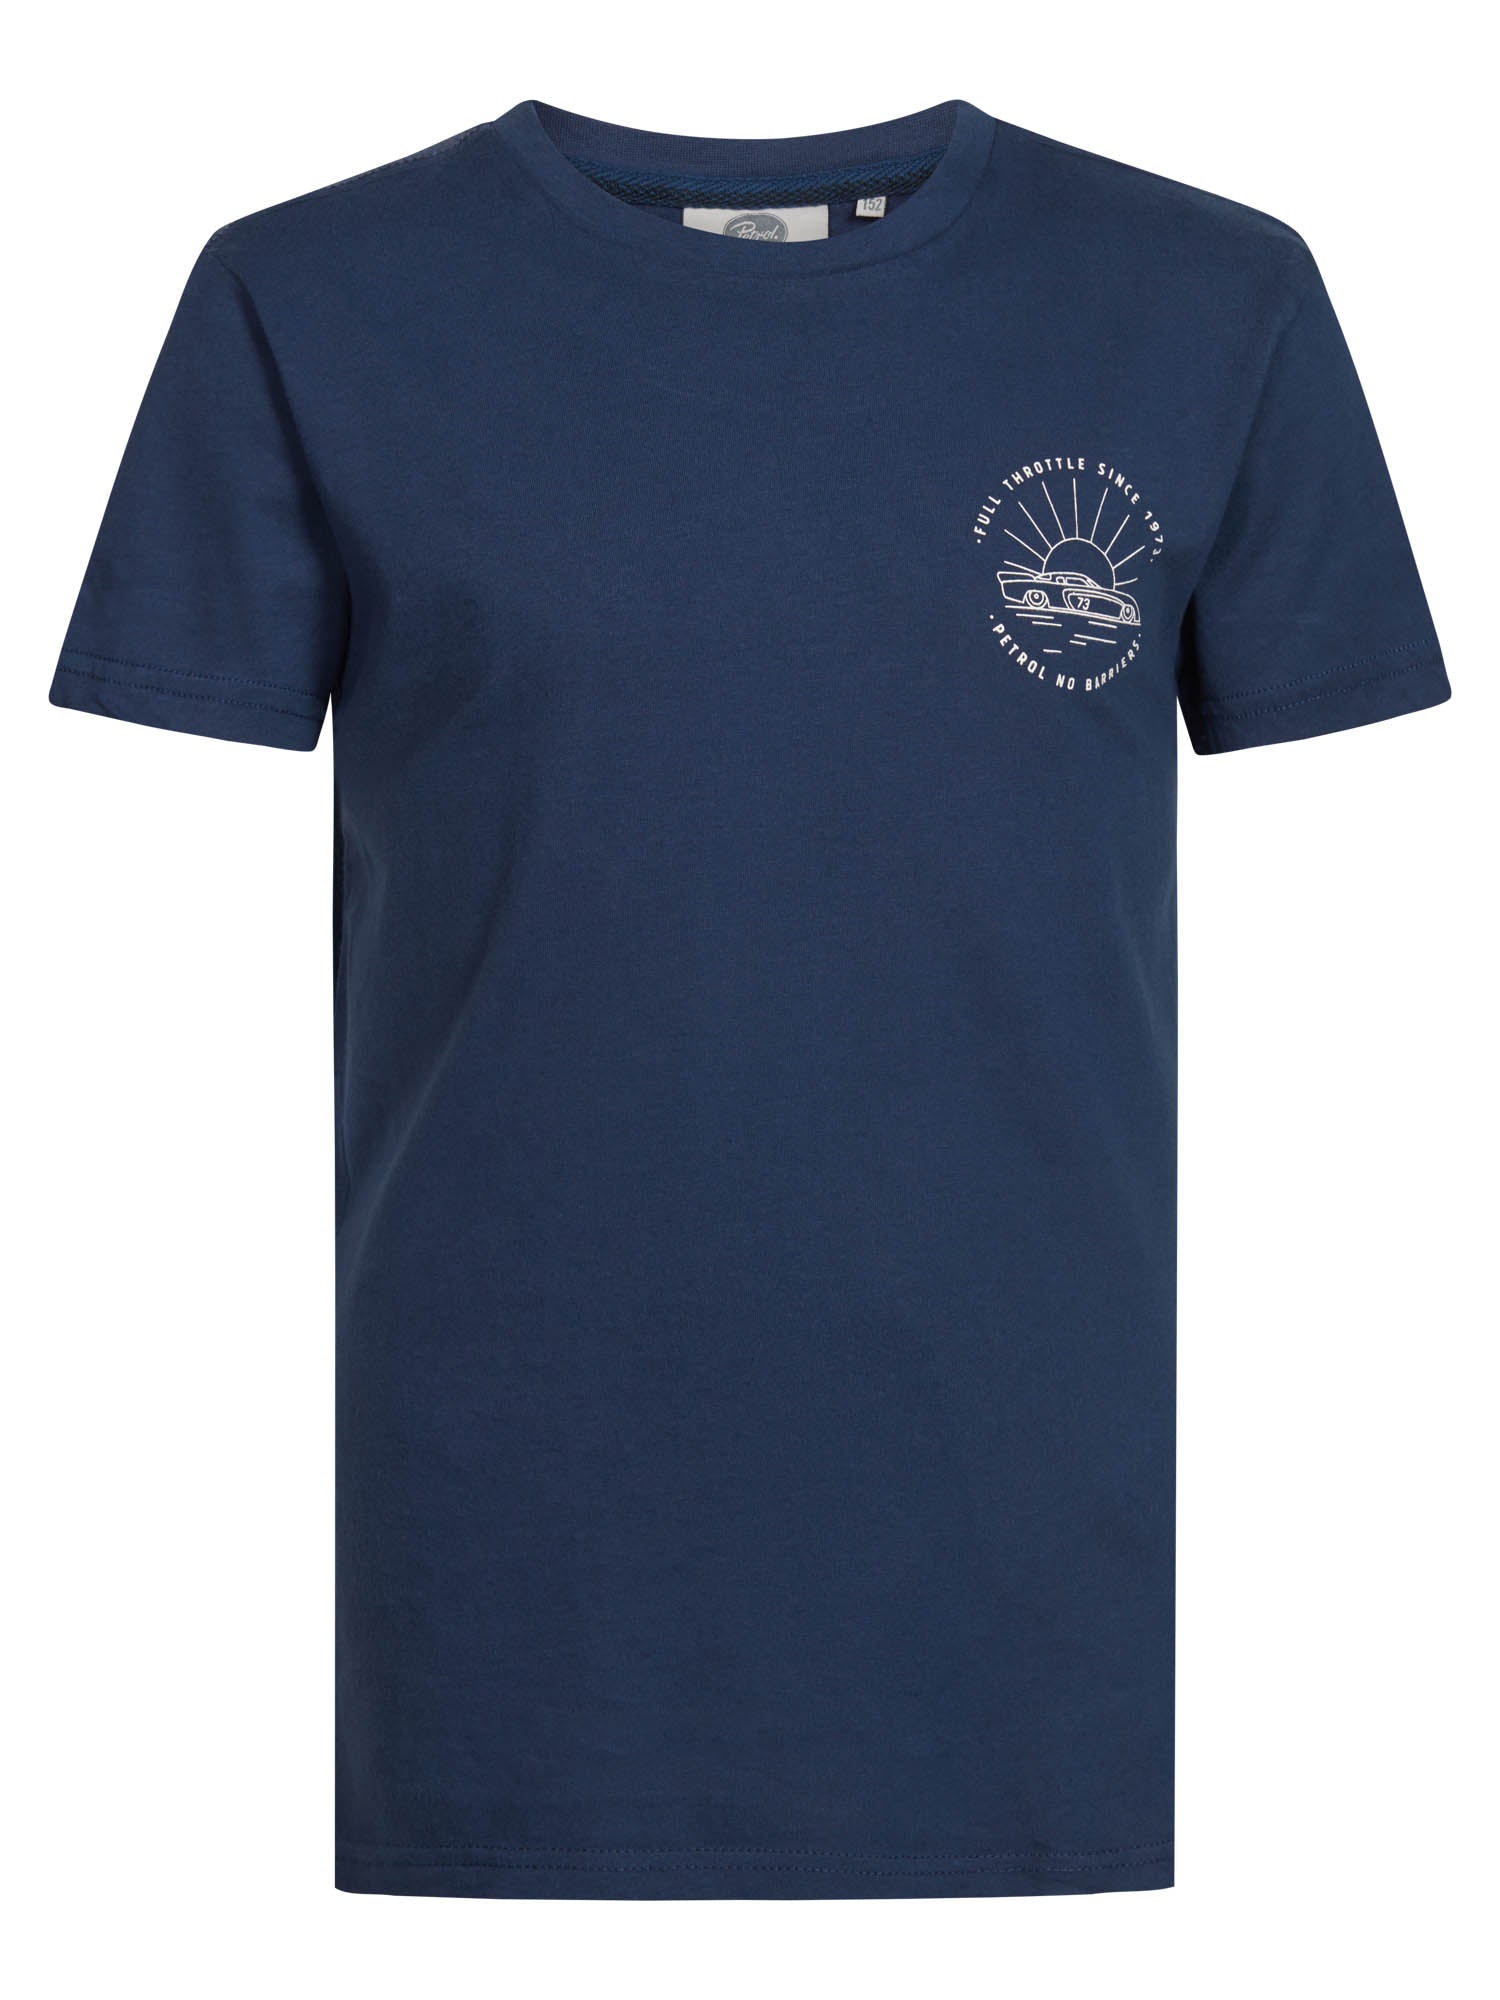 Jongens T-shirt   van Petrol in de kleur Petrol Blue in maat 176.